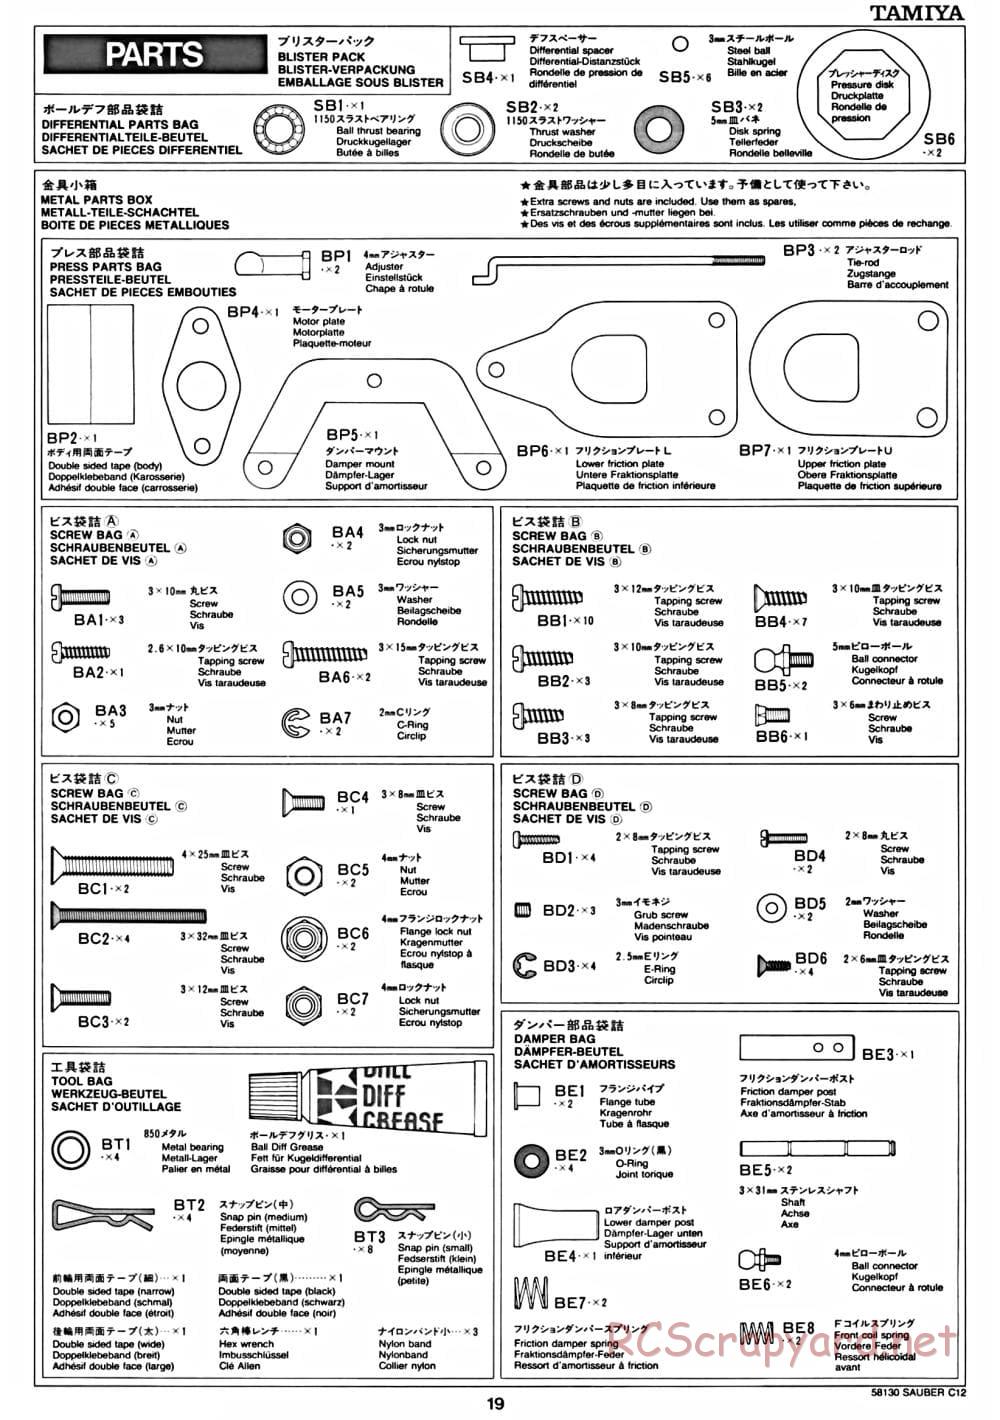 Tamiya - Sauber C12 - F103 Chassis - Manual - Page 19